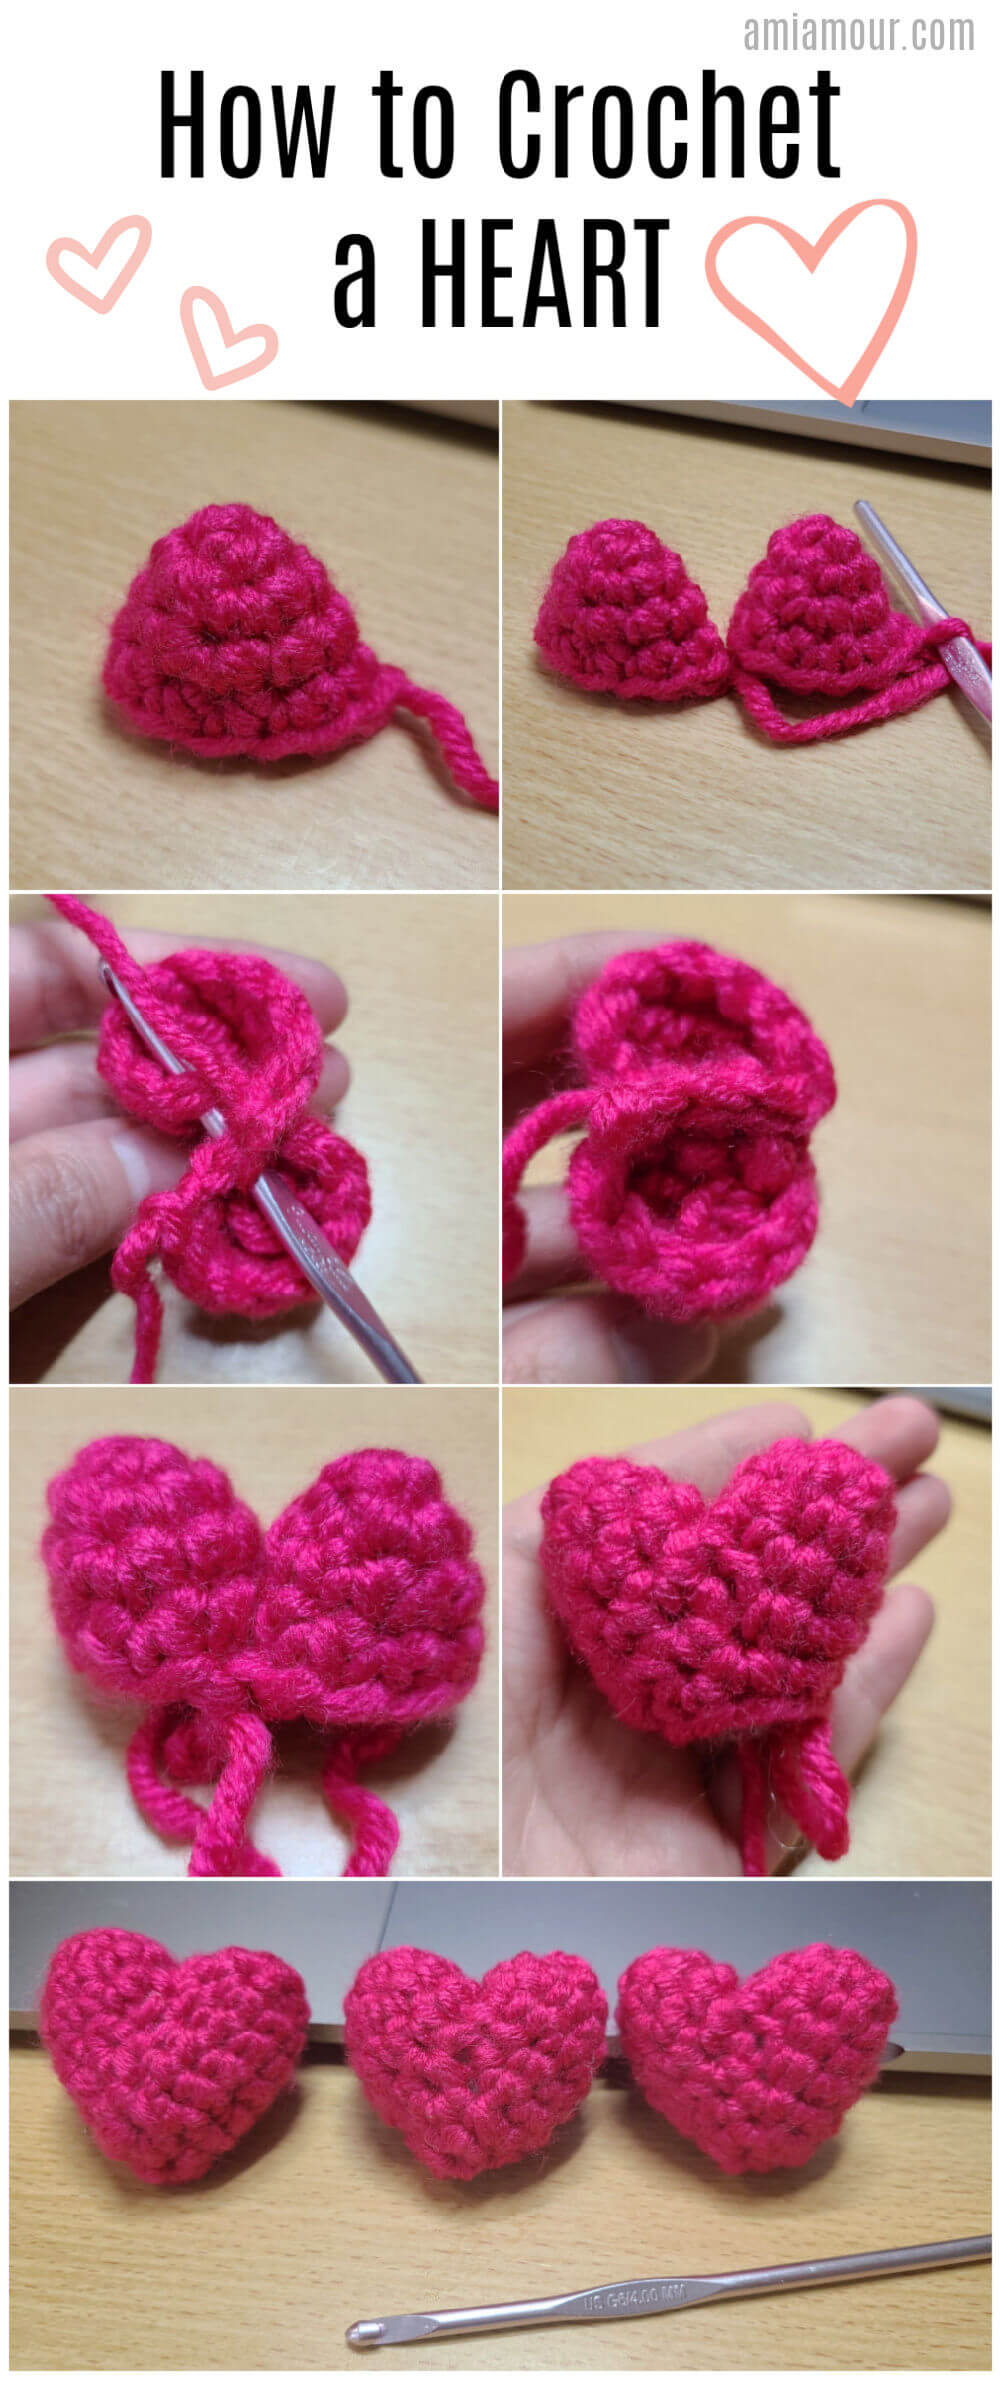 Crochet Heart Photo Tutorial